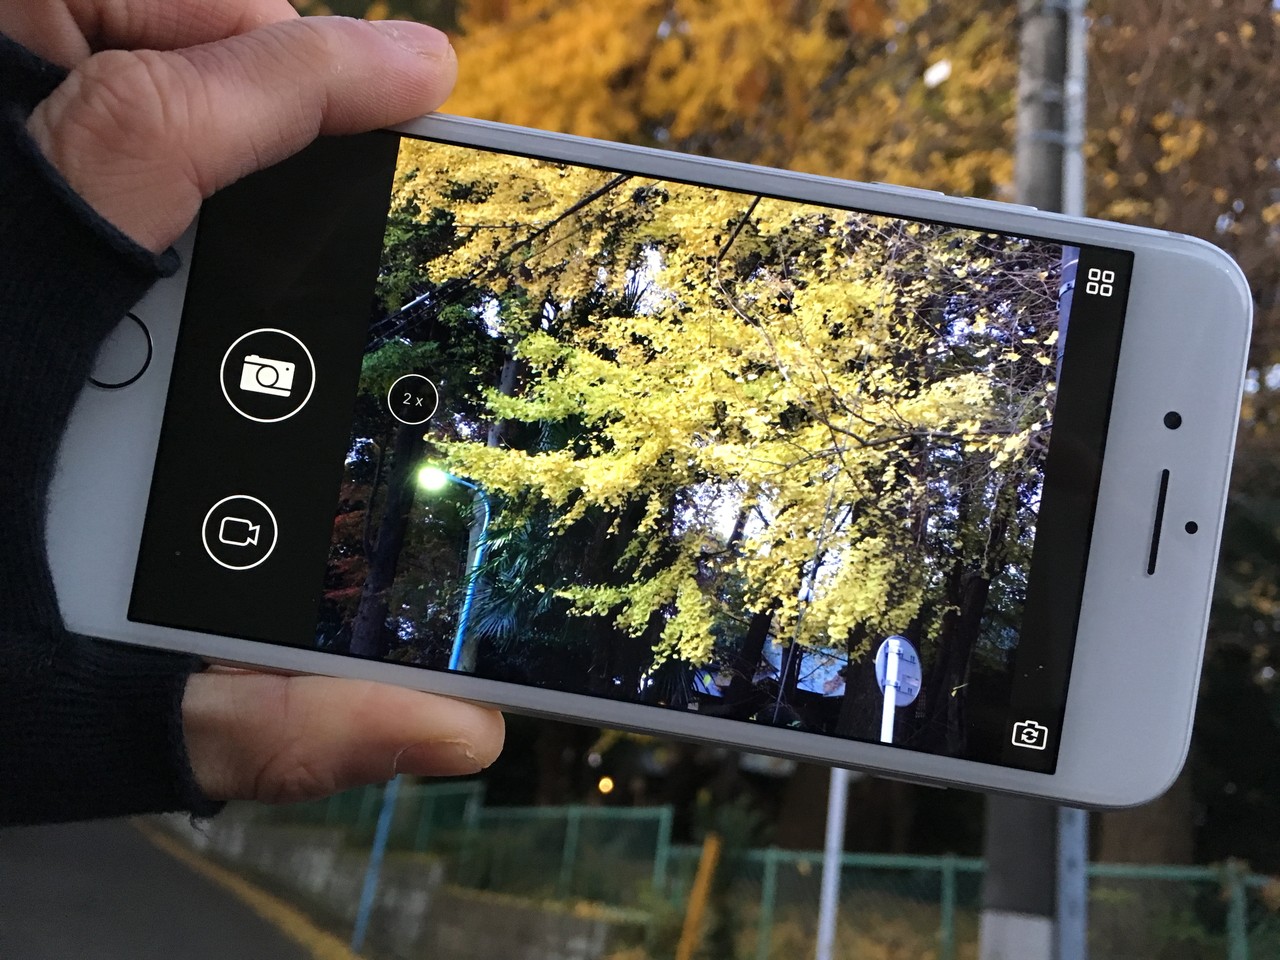 Iphoneでシャッター音を鳴らさずにカメラ撮影ができるアプリ Microsoft Pix がバージョンアップ Iphone 7 Plusのデュアルレンズに対応し 望遠撮影が可能に S Max